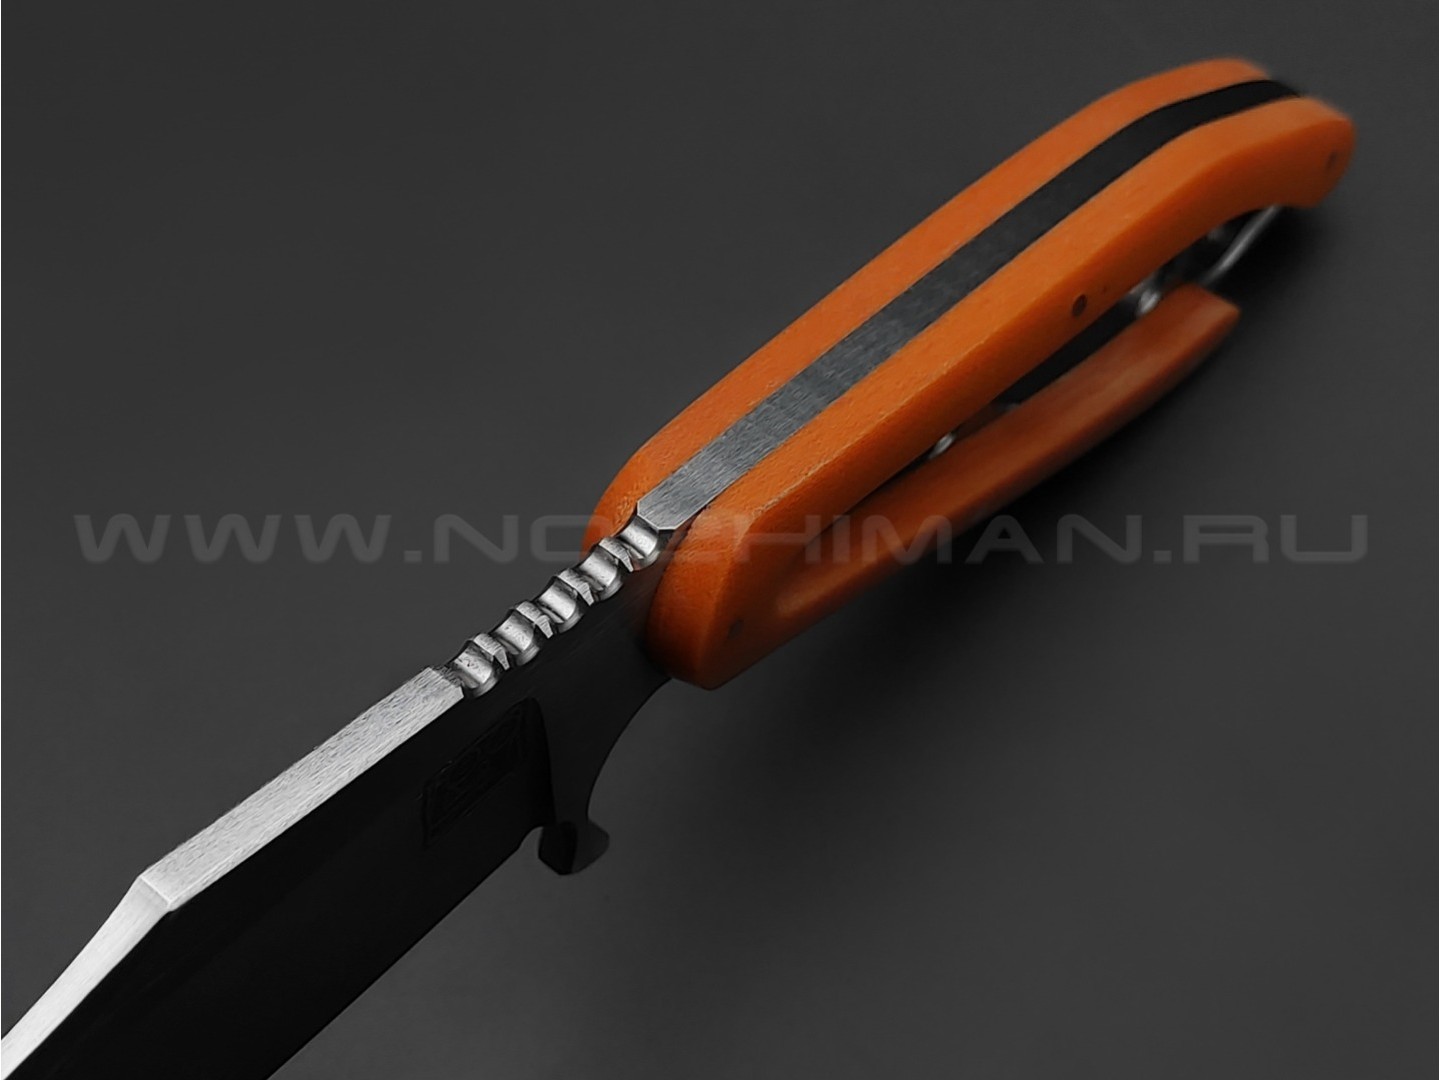 1-й Цех нож "Сиськи" сталь 440C, рукоять микарта orange